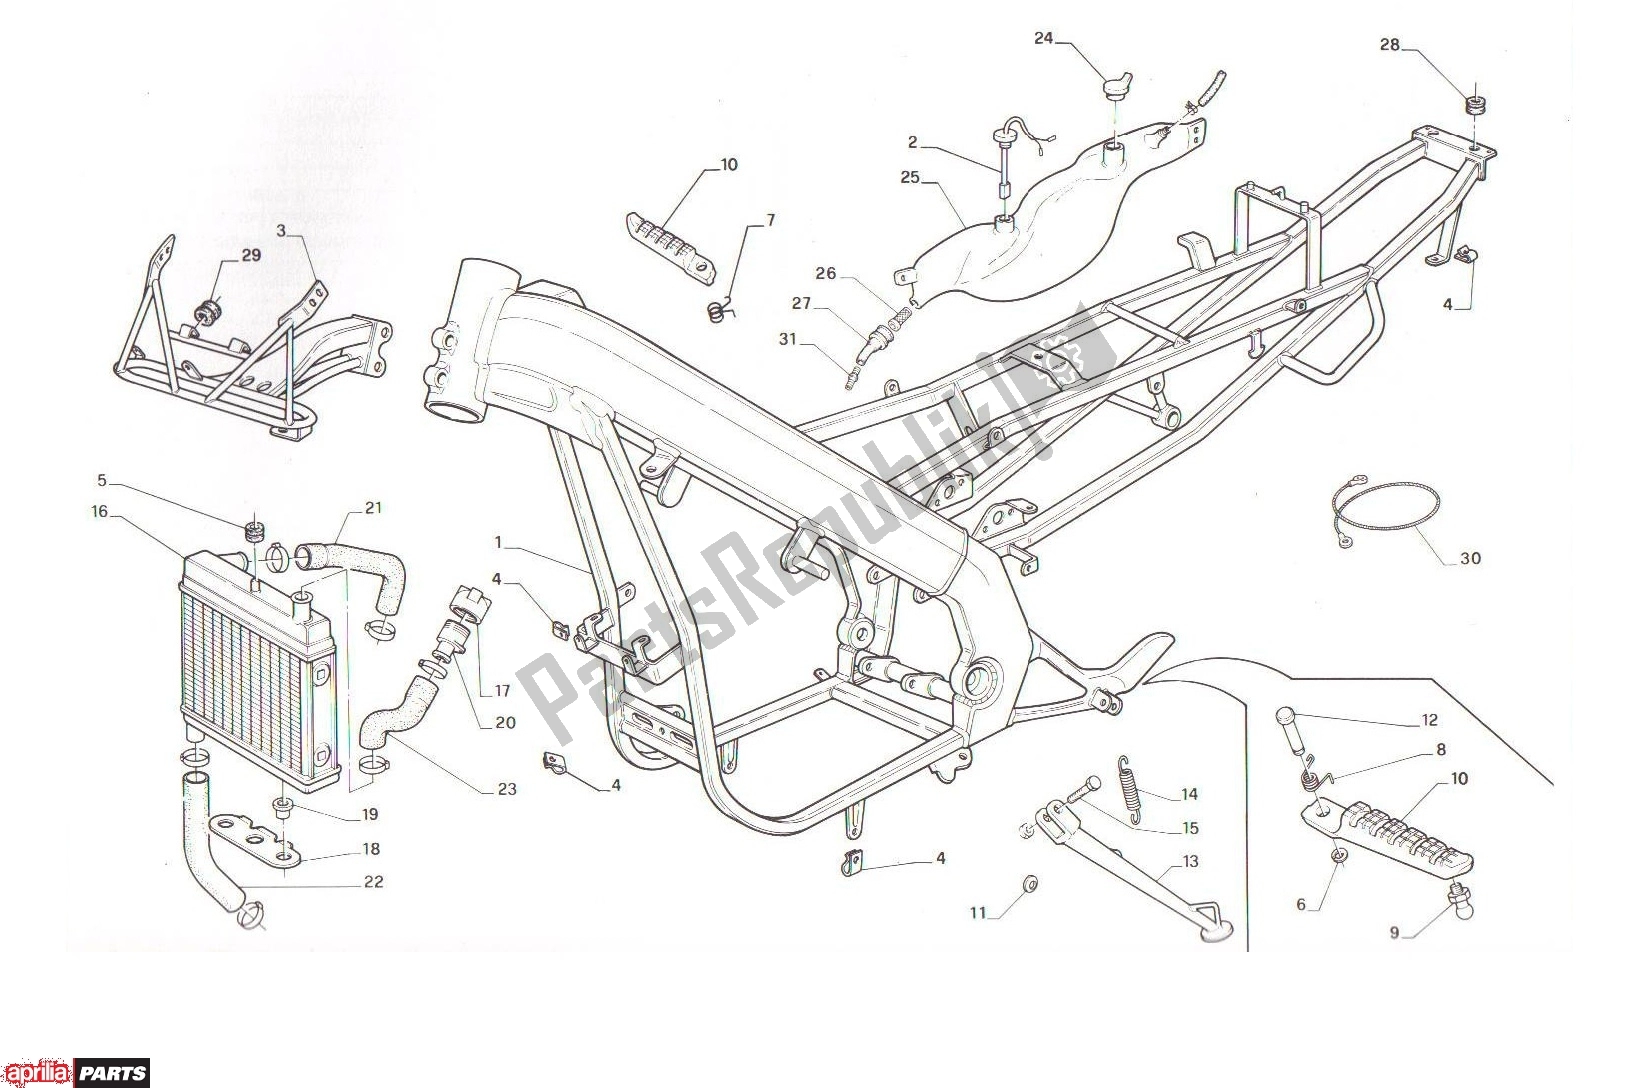 All parts for the Frame of the Aprilia AF1 Futura 321 50 1991 - 1992